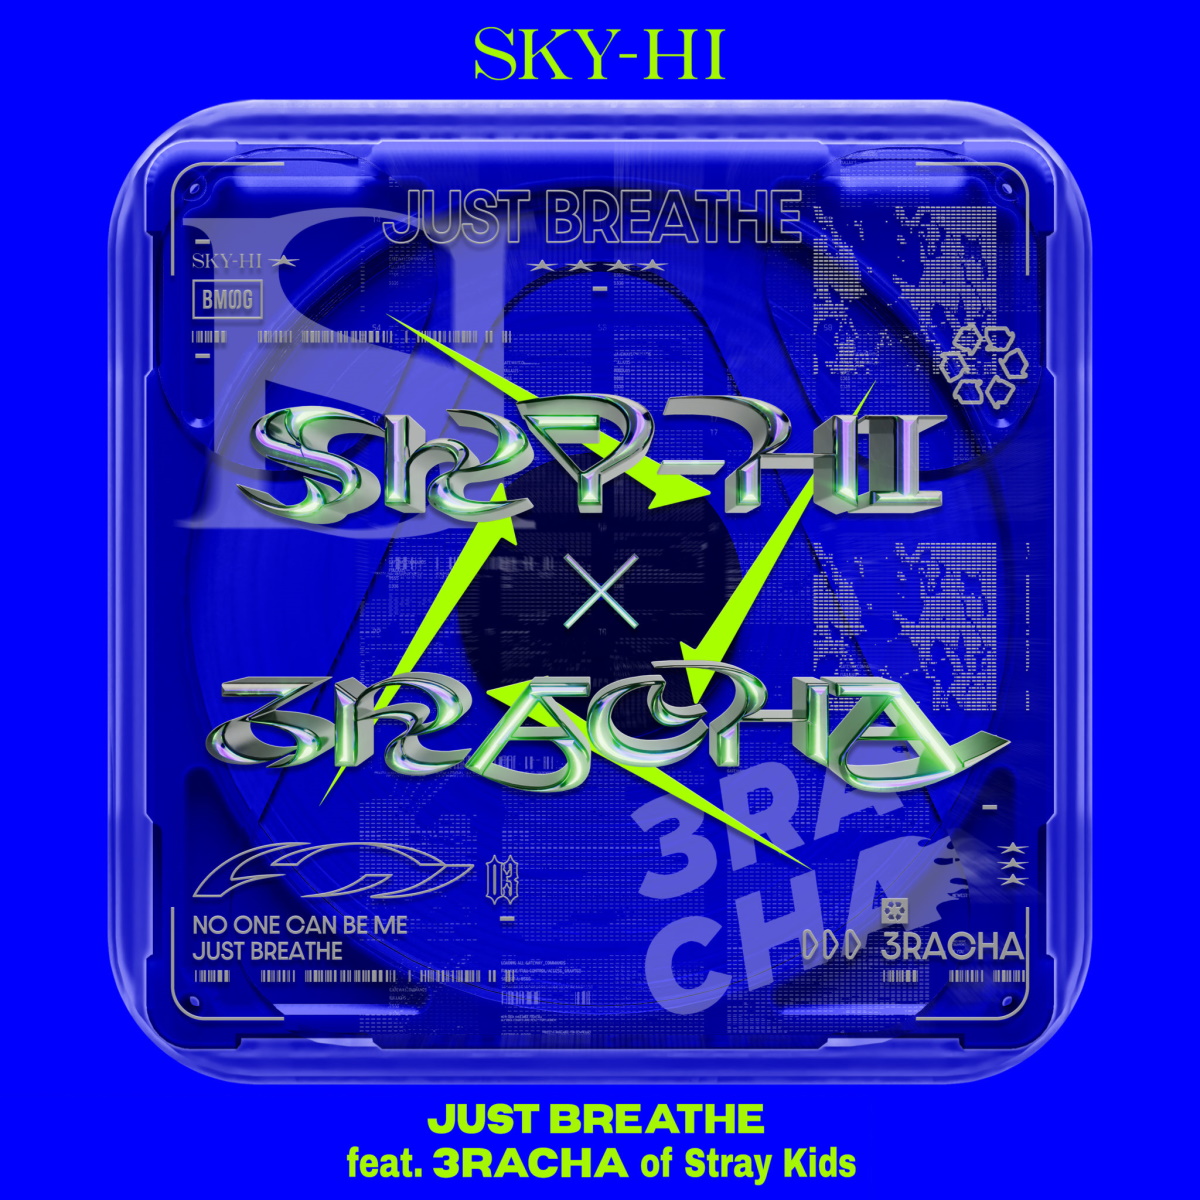 『SKY-HI - JUST BREATHE feat. 3RACHA of Stray Kids 歌詞』収録の『JUST BREATHE feat. 3RACHA of Stray Kids』ジャケット